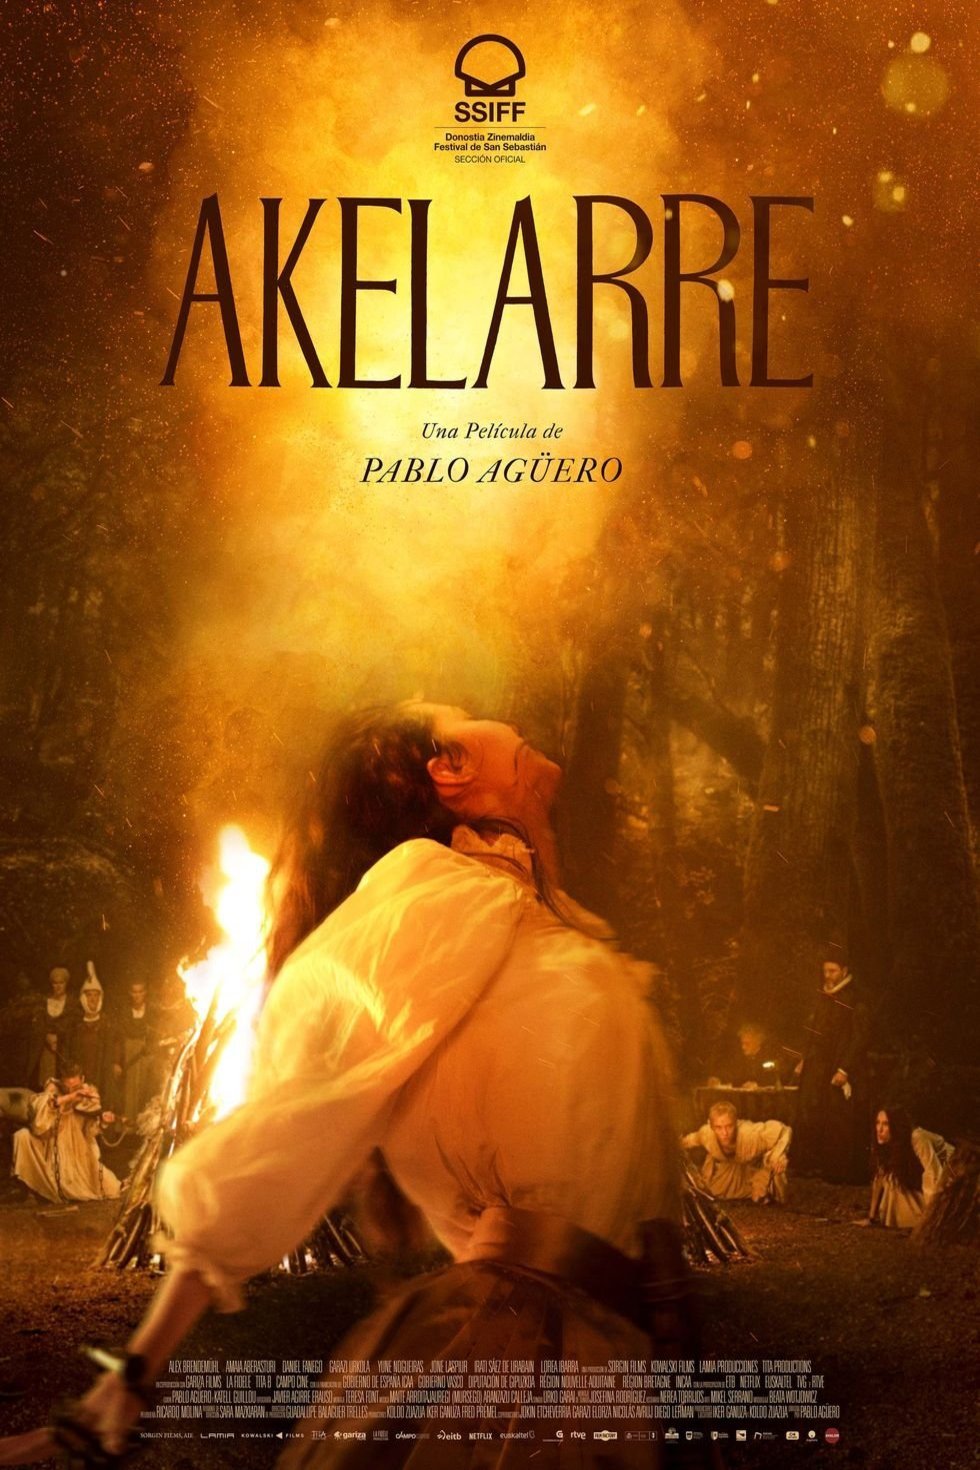 Spanish poster of the movie Akelarre